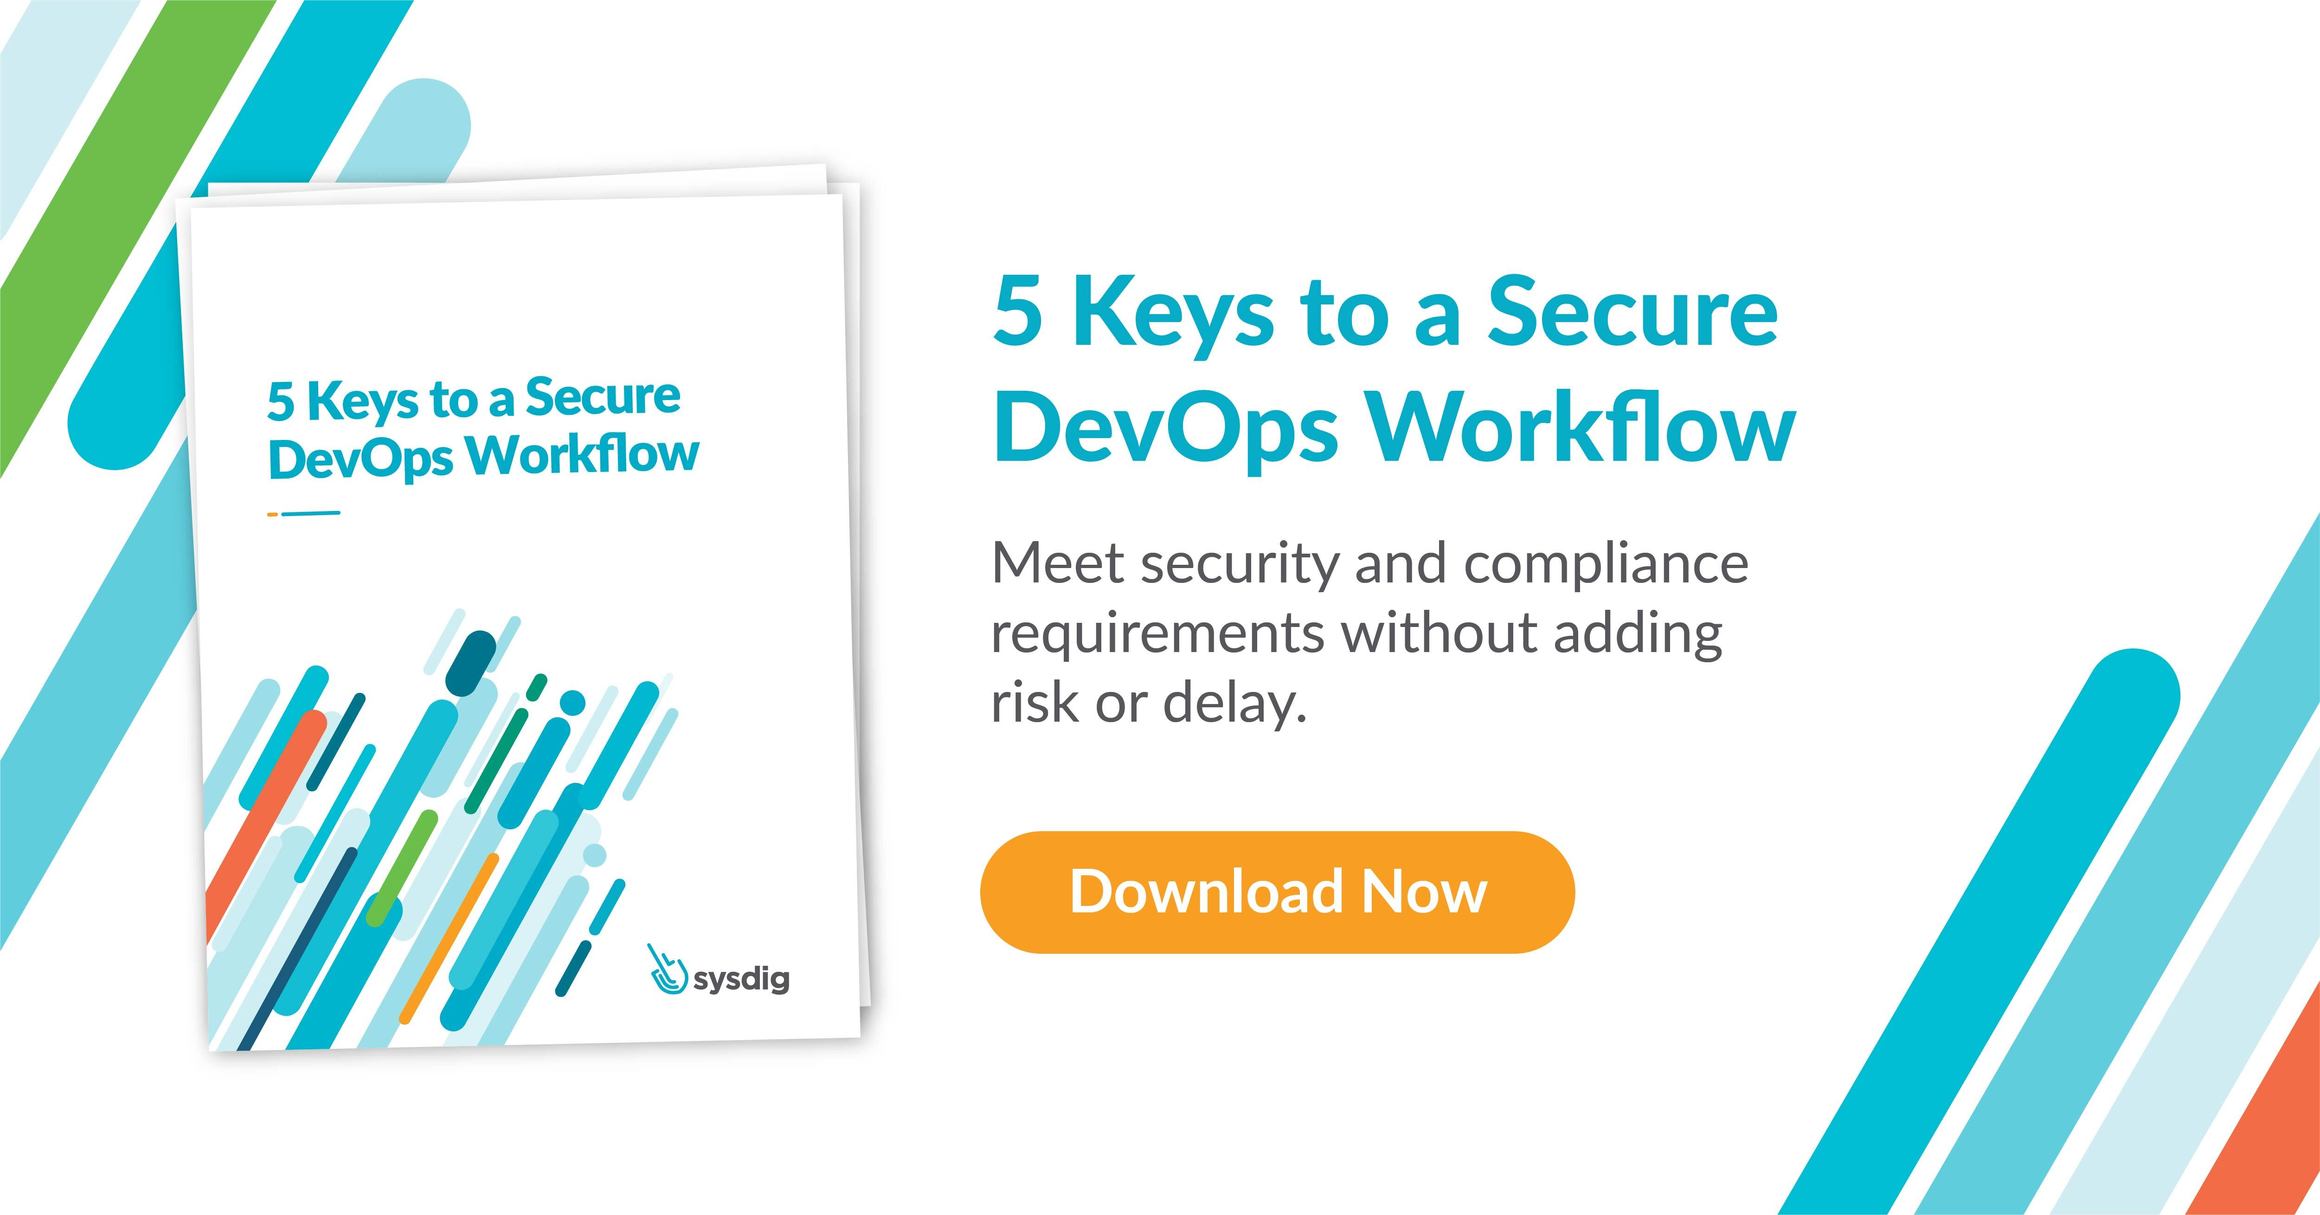 5 Keys to a Secure DevOps Workflow. Download now.